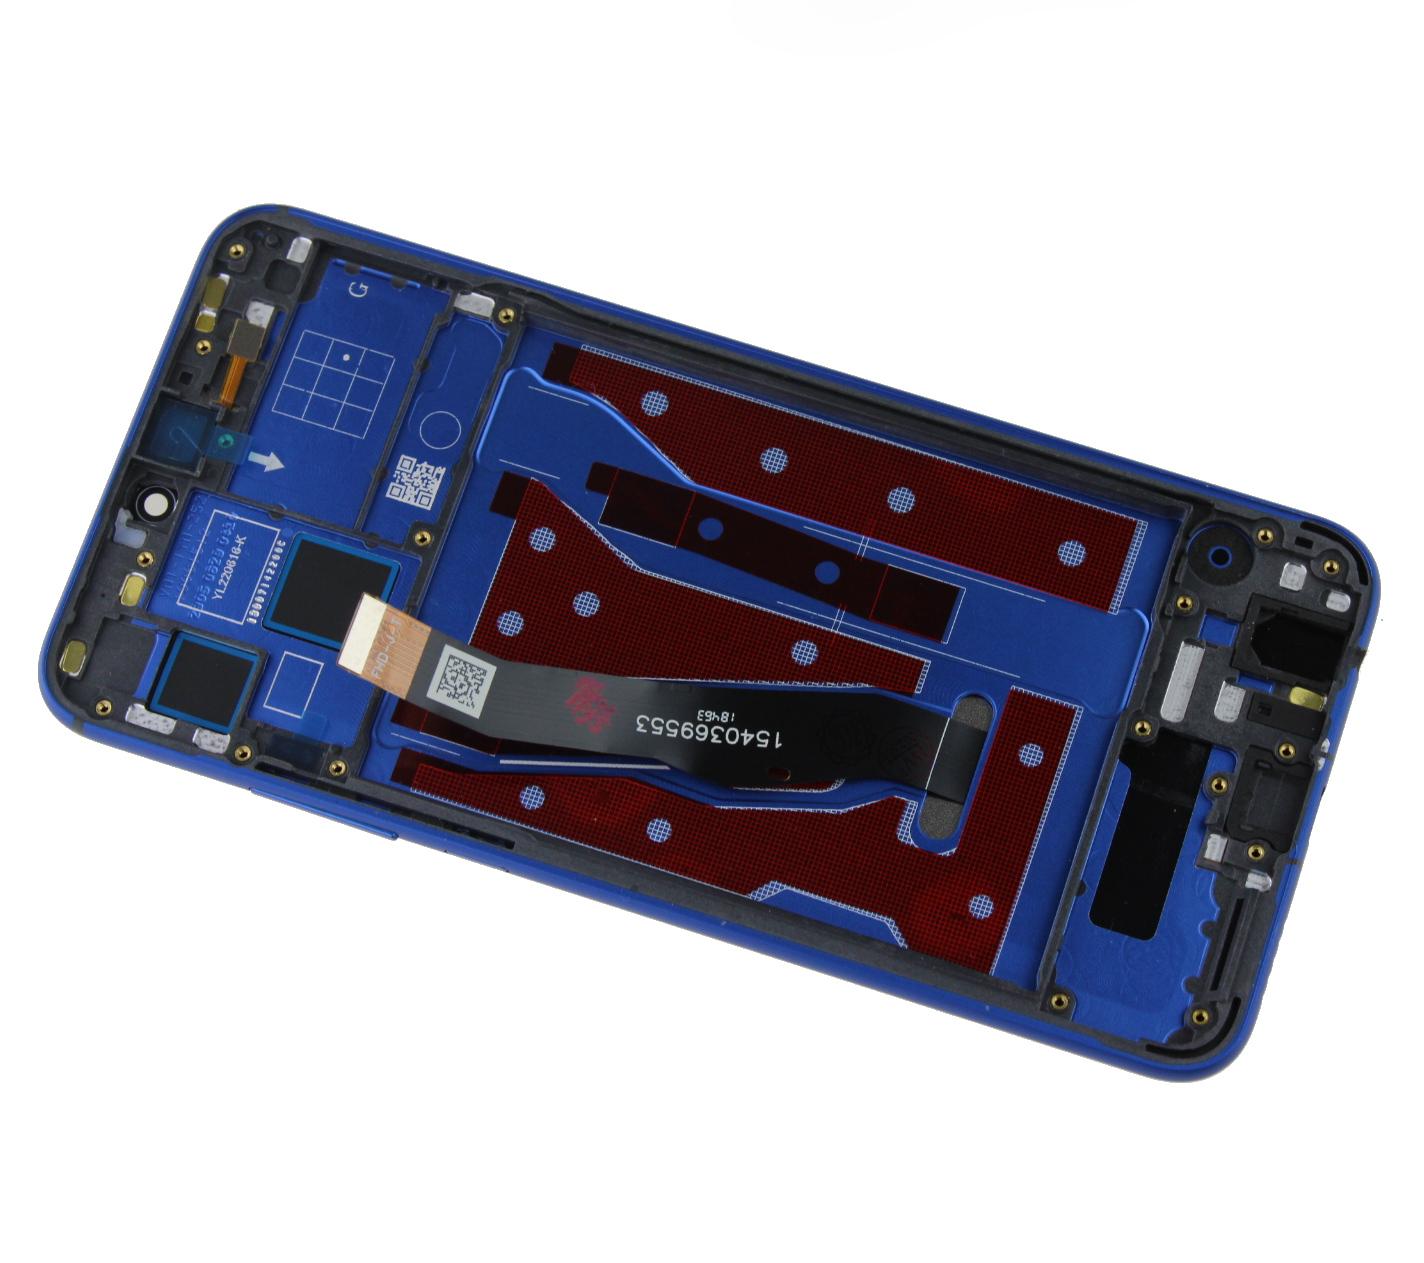 Originál LCD + Dotyková vrstva Huawei Honor 8X modrá repasovayný díl - vyměněné sklíčko